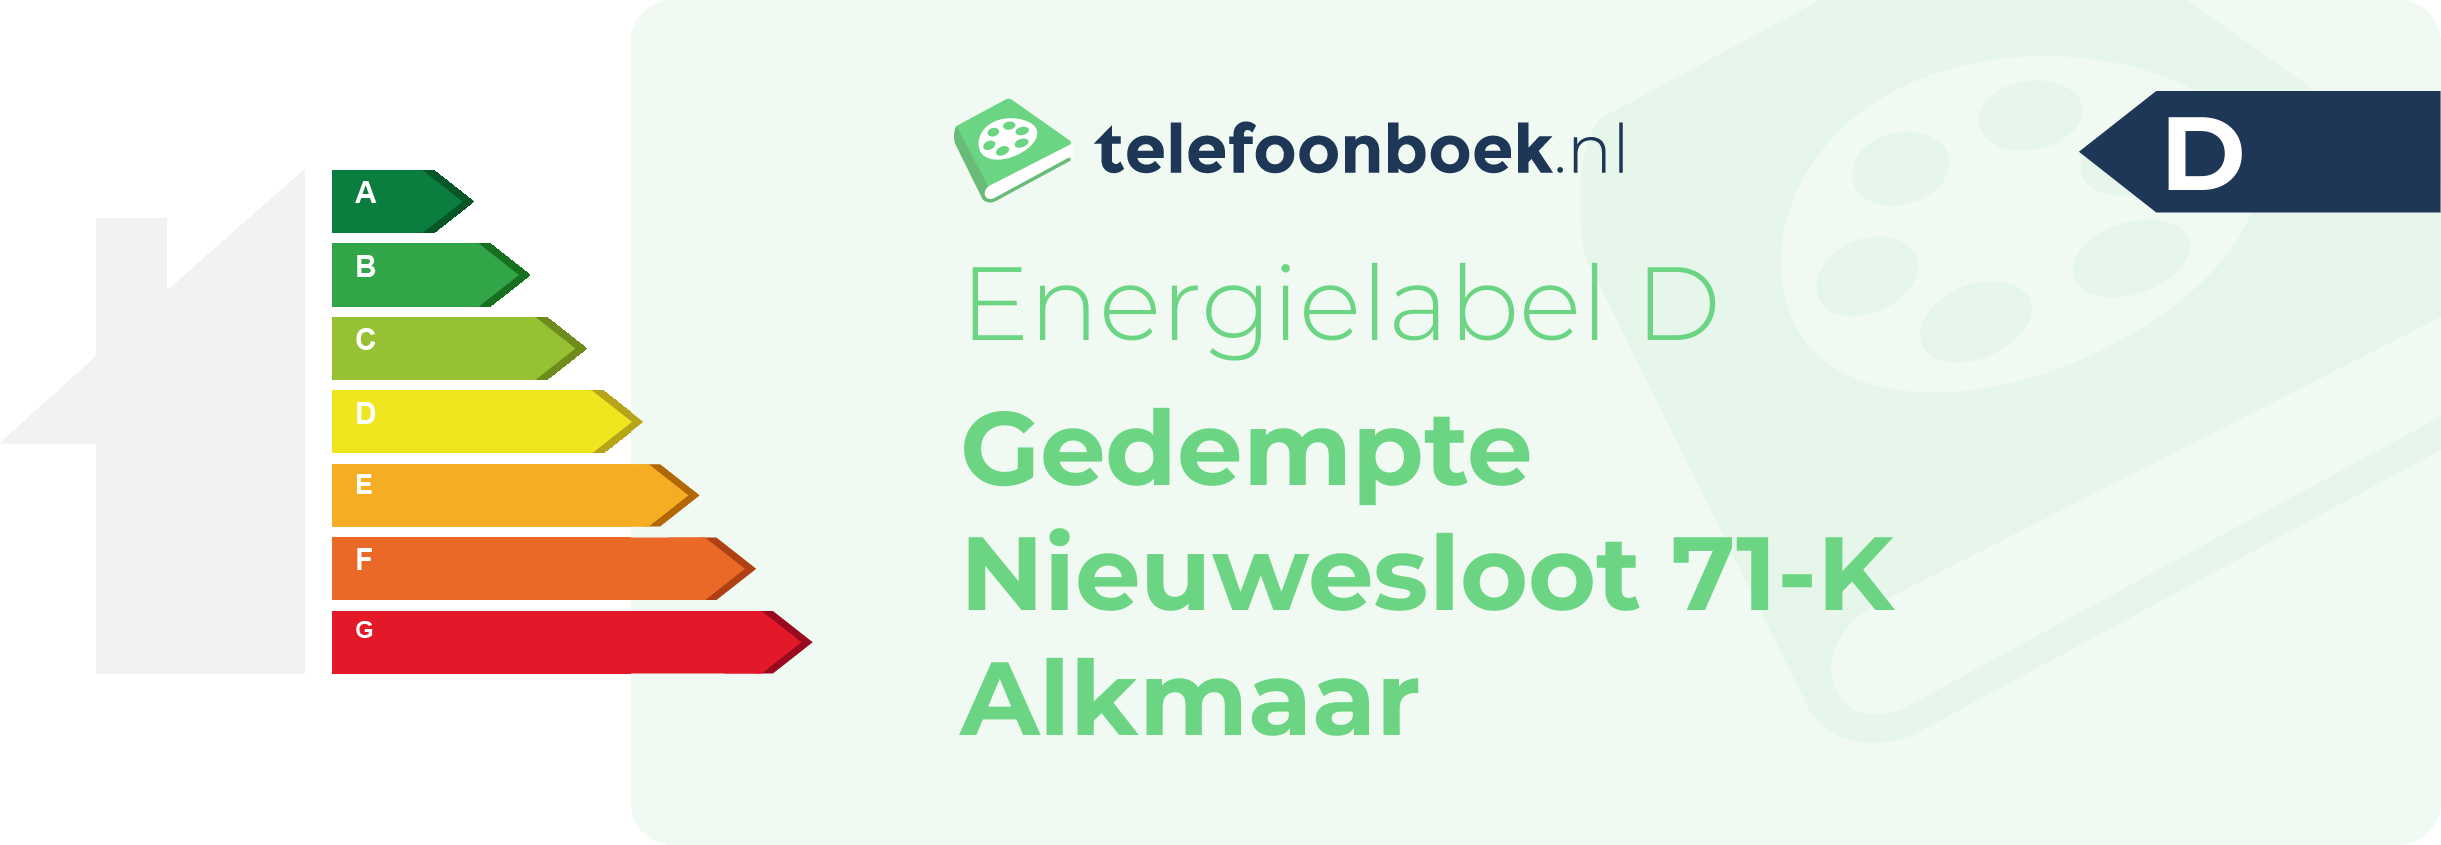 Energielabel Gedempte Nieuwesloot 71-K Alkmaar